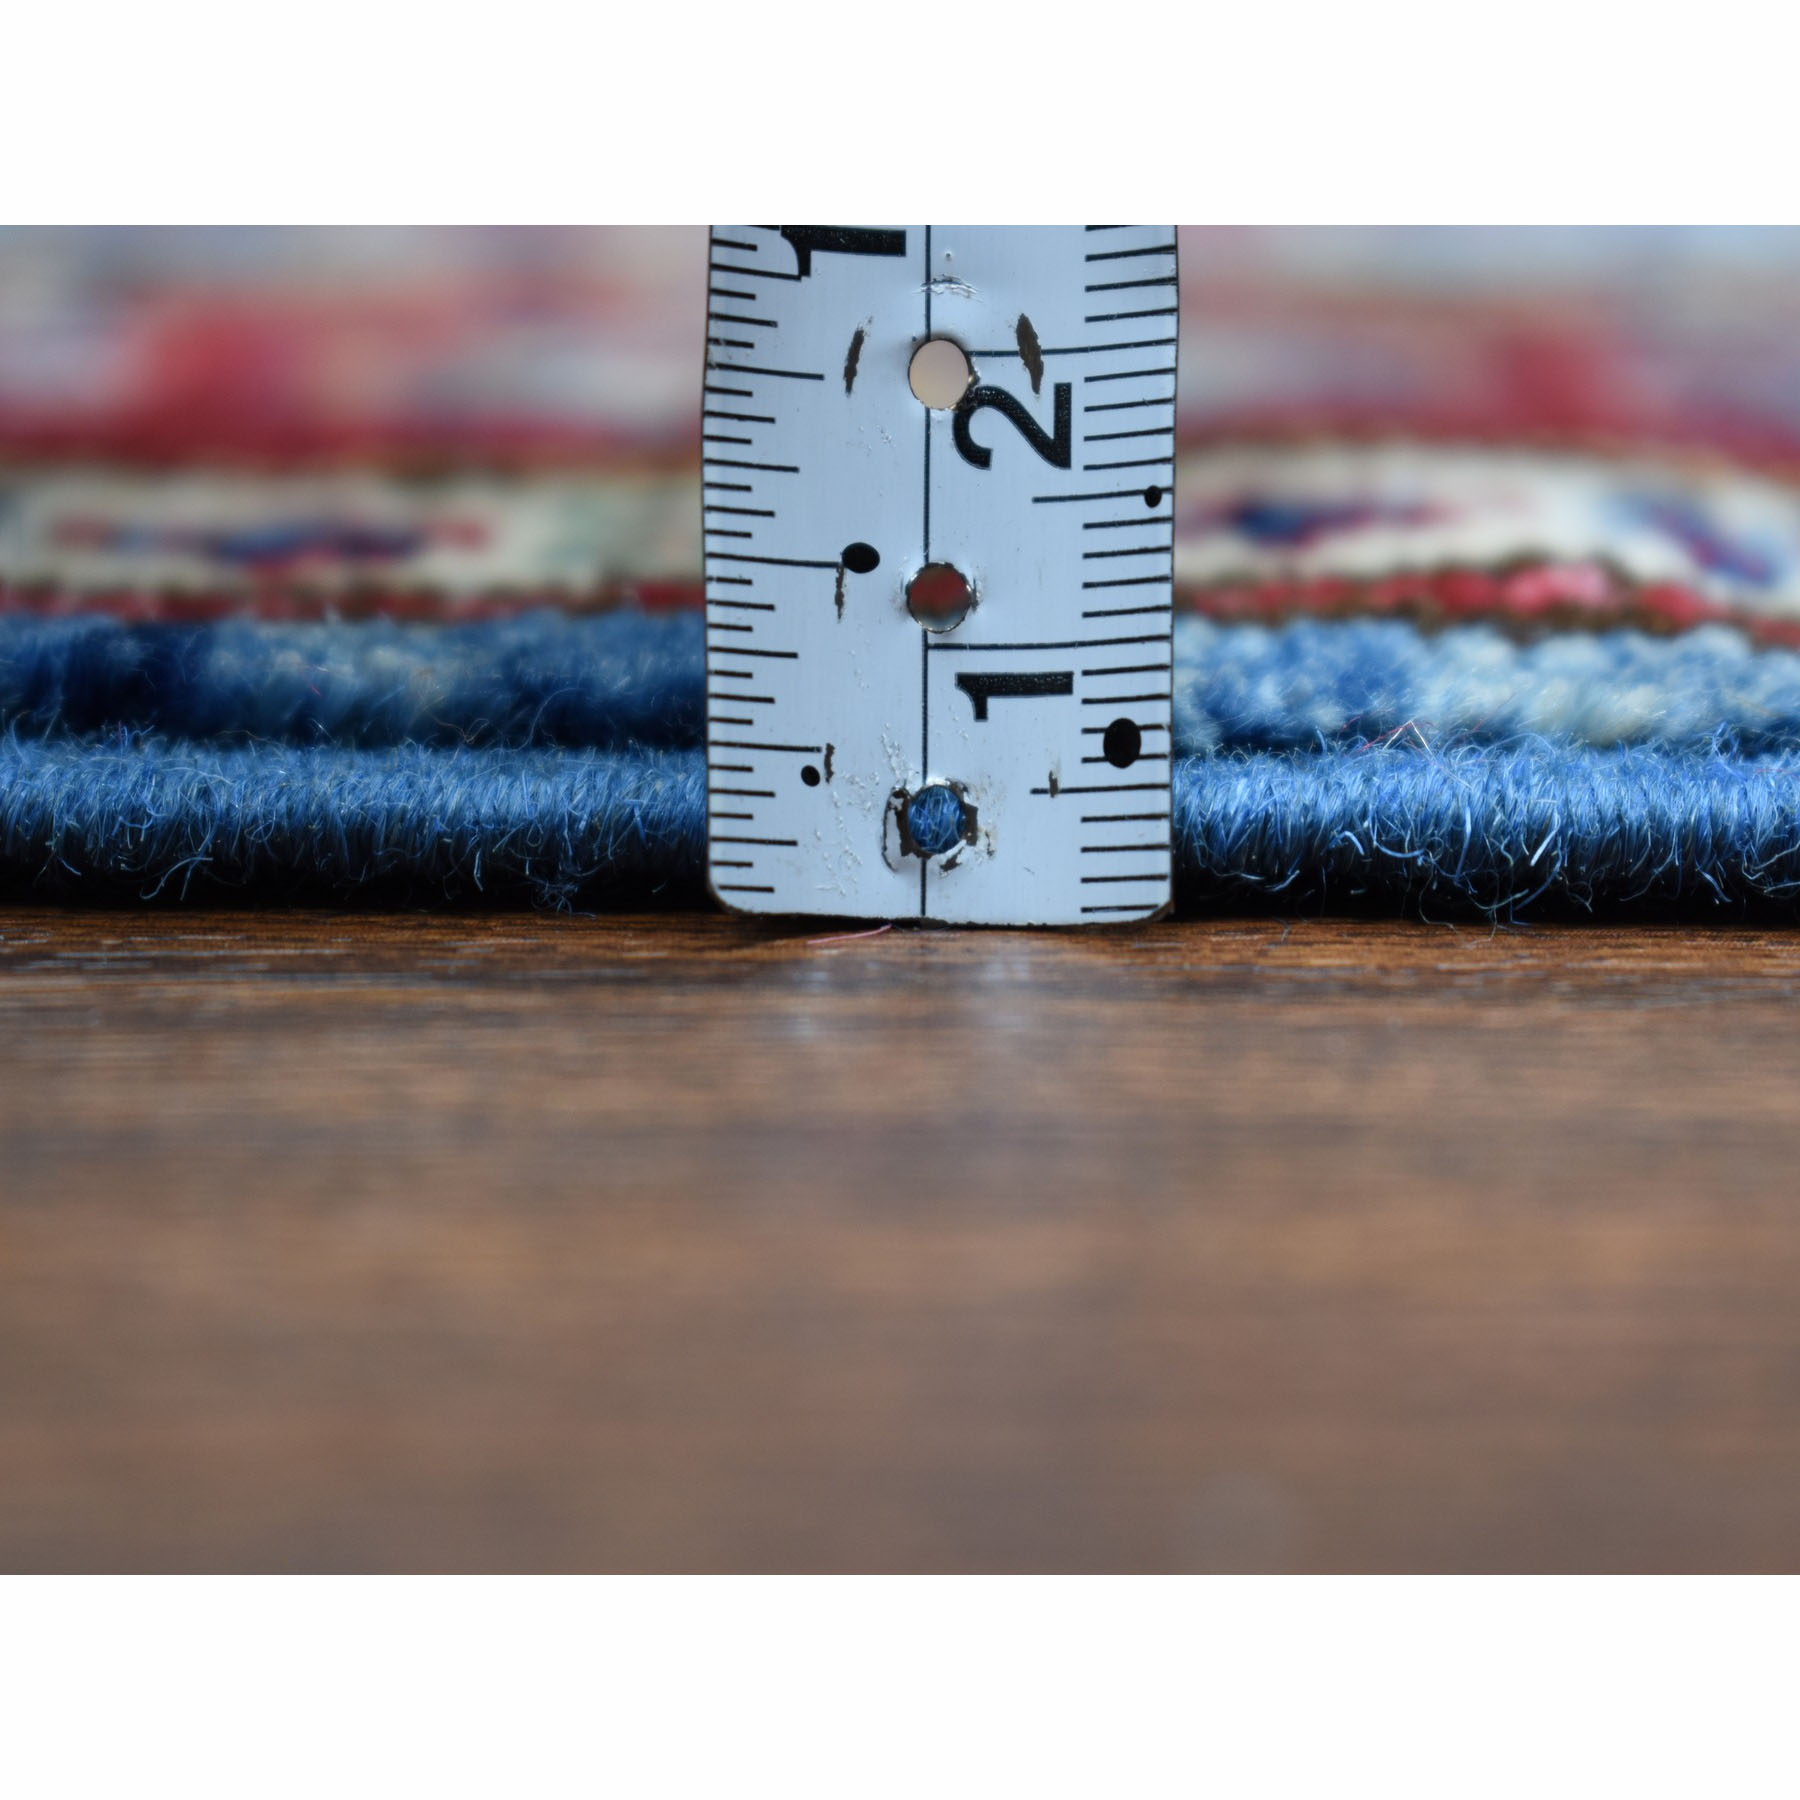 2-x3- Super Kazak Pure Wool Blue Geometric Design Hand-Knotted Oriental Rug 